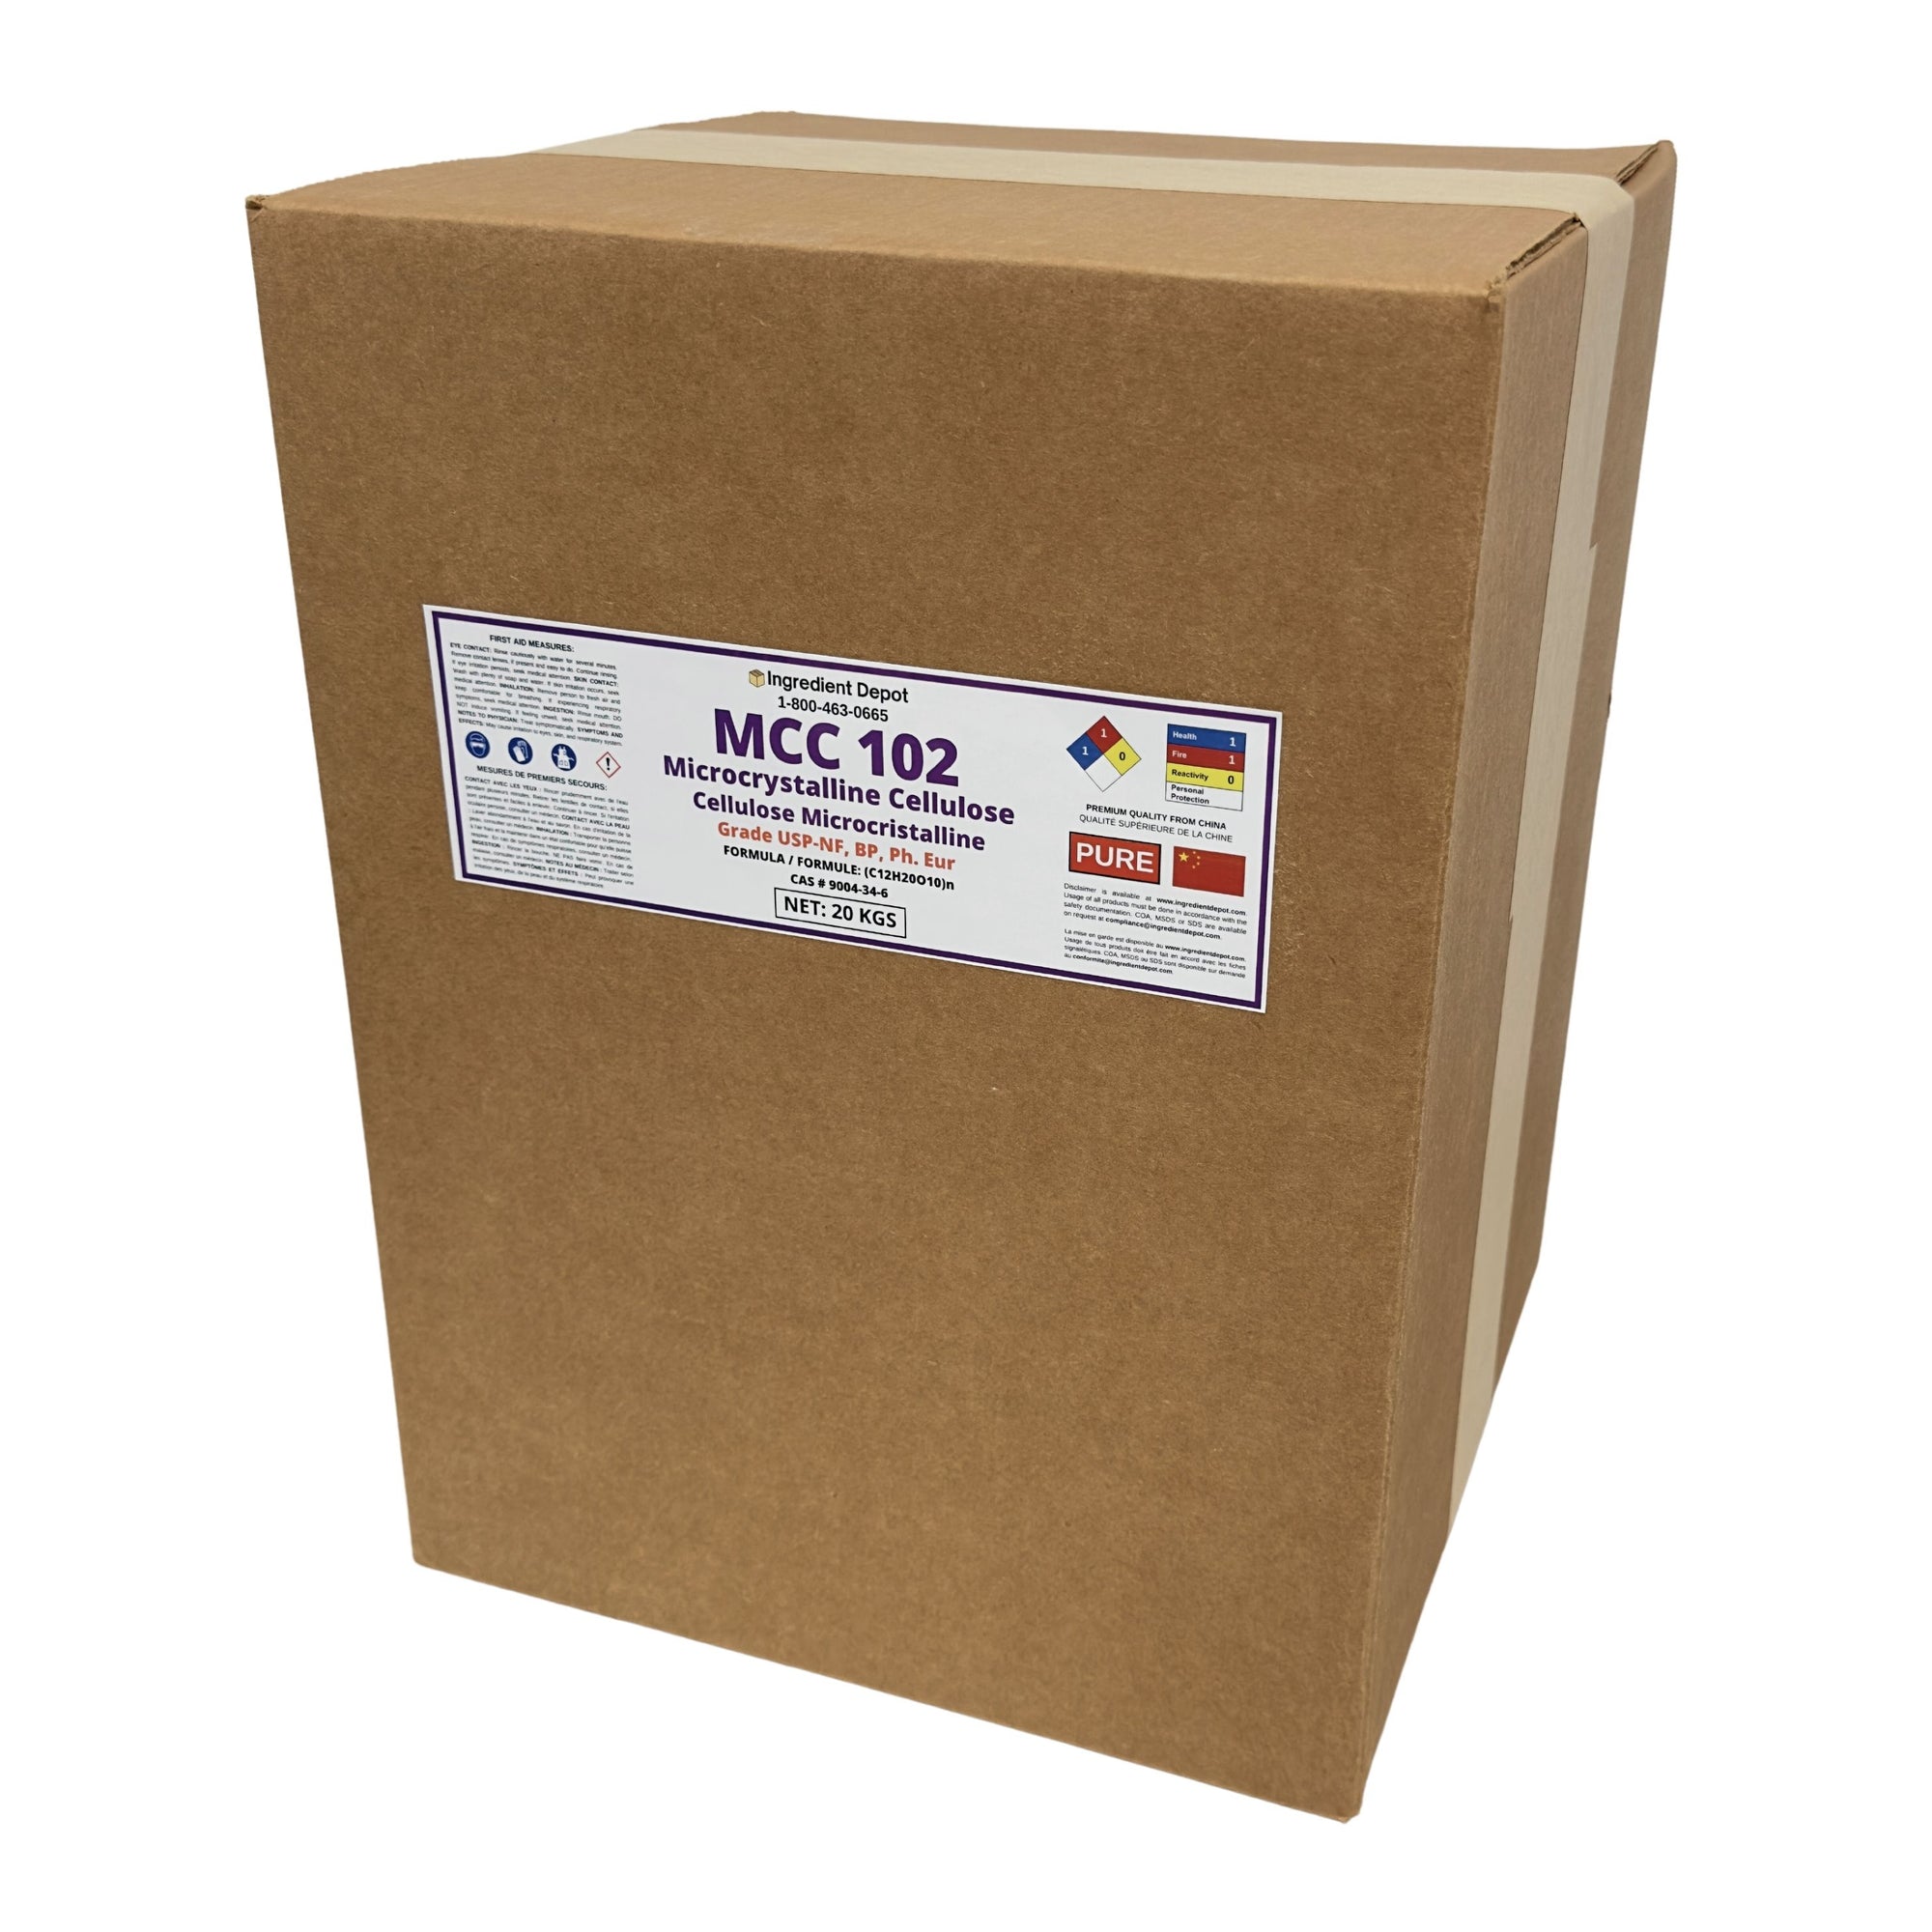 MCC 102 Microcrystalline Cellulose 20 kgs